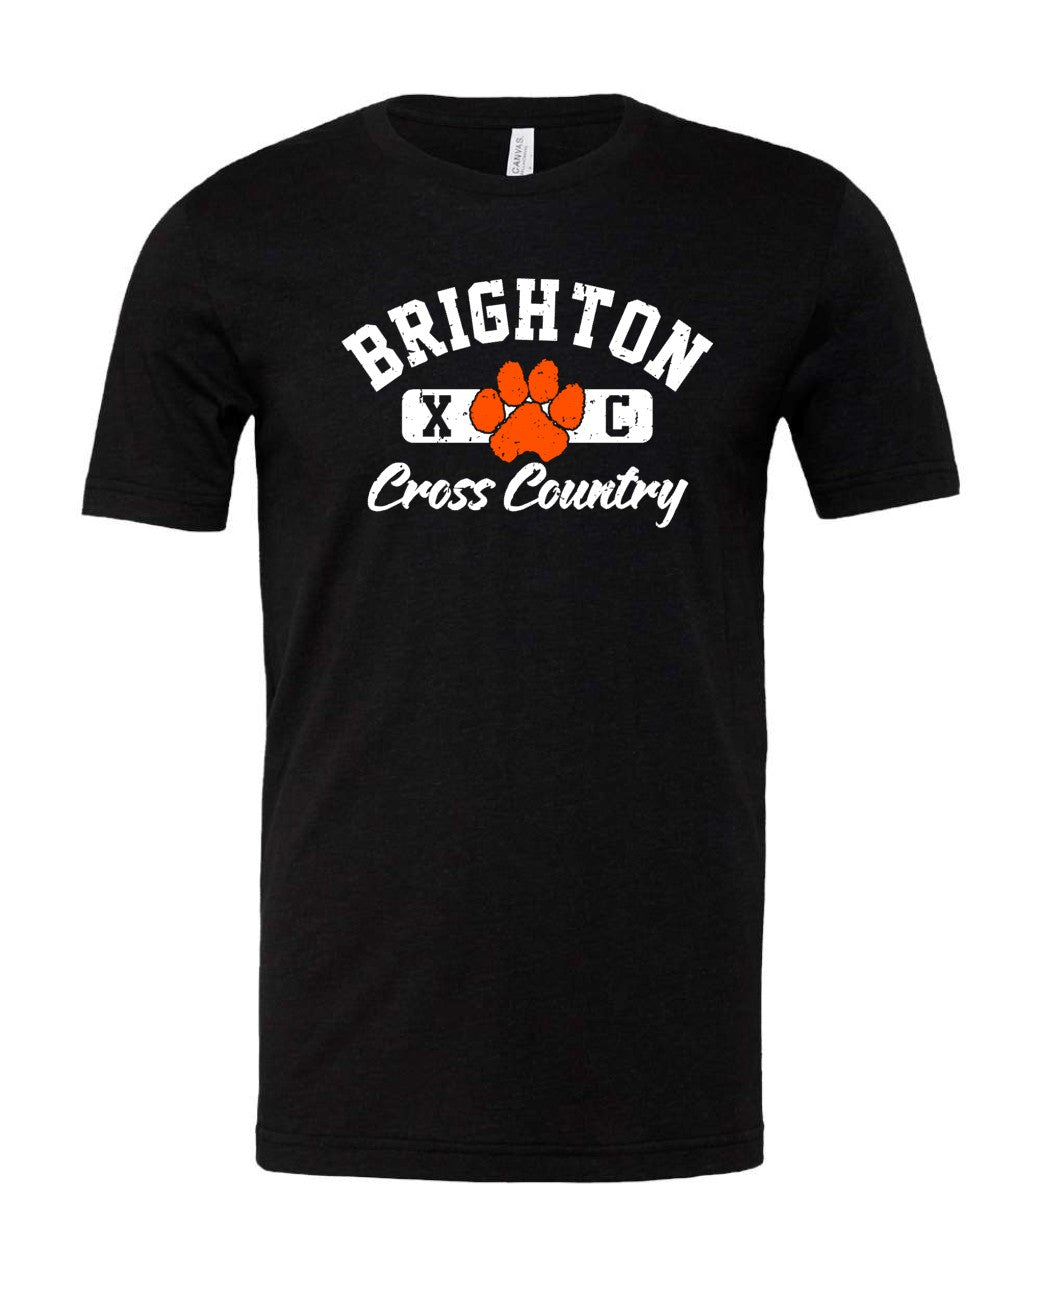 Brighton Cross Country Premium Tee